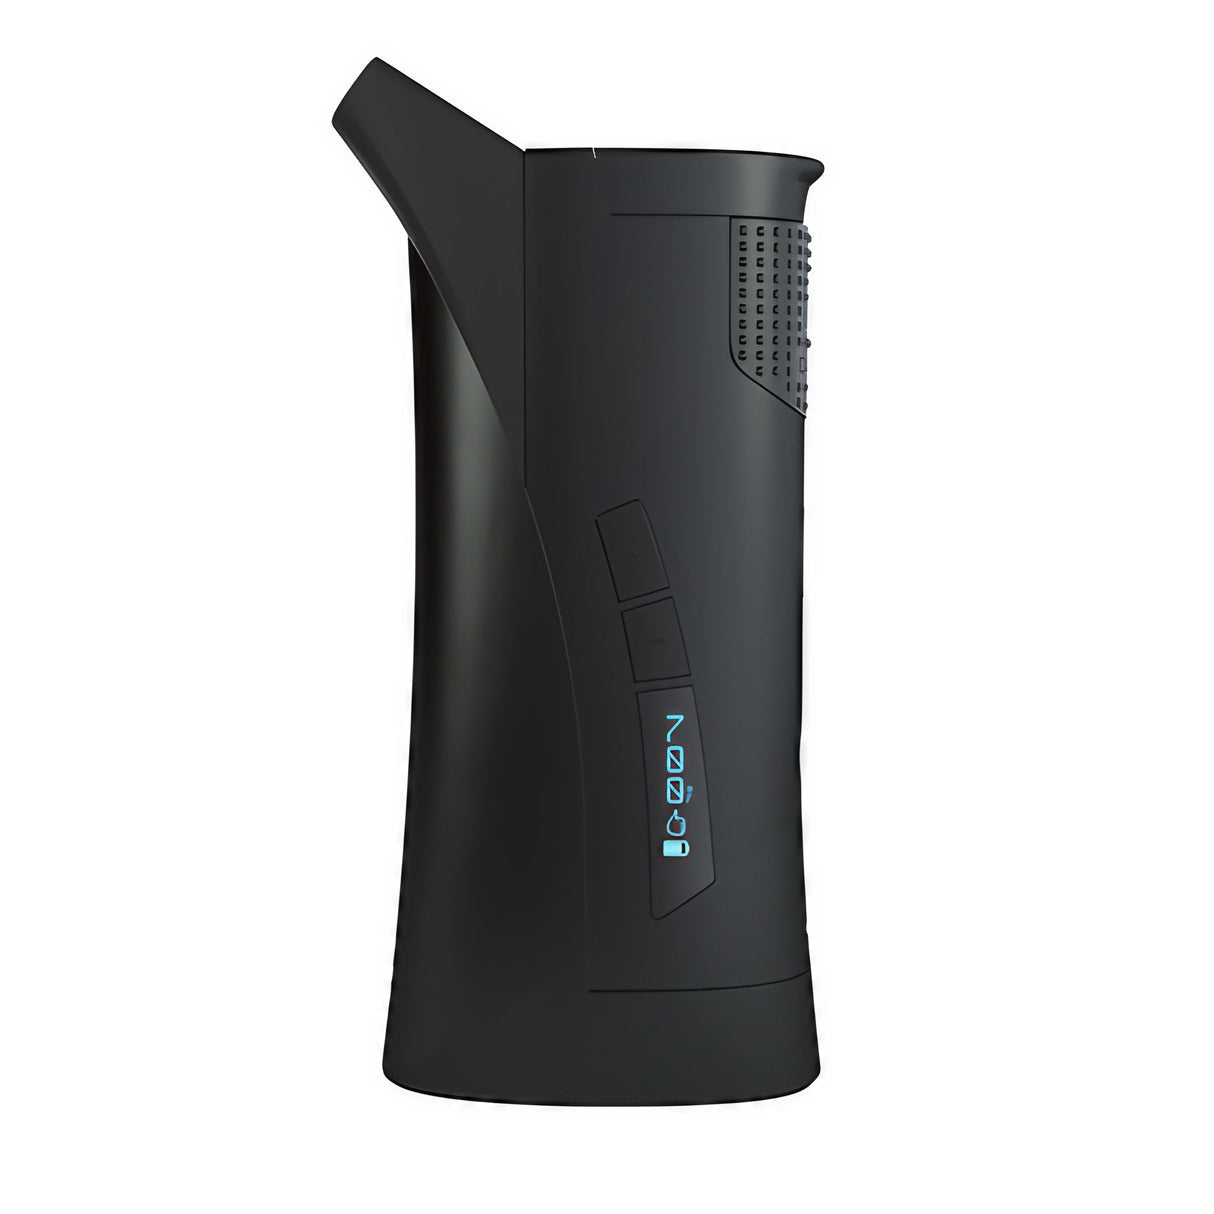 Grenco Science G Pen Roam Vaporizer in black, portable design with digital temperature display